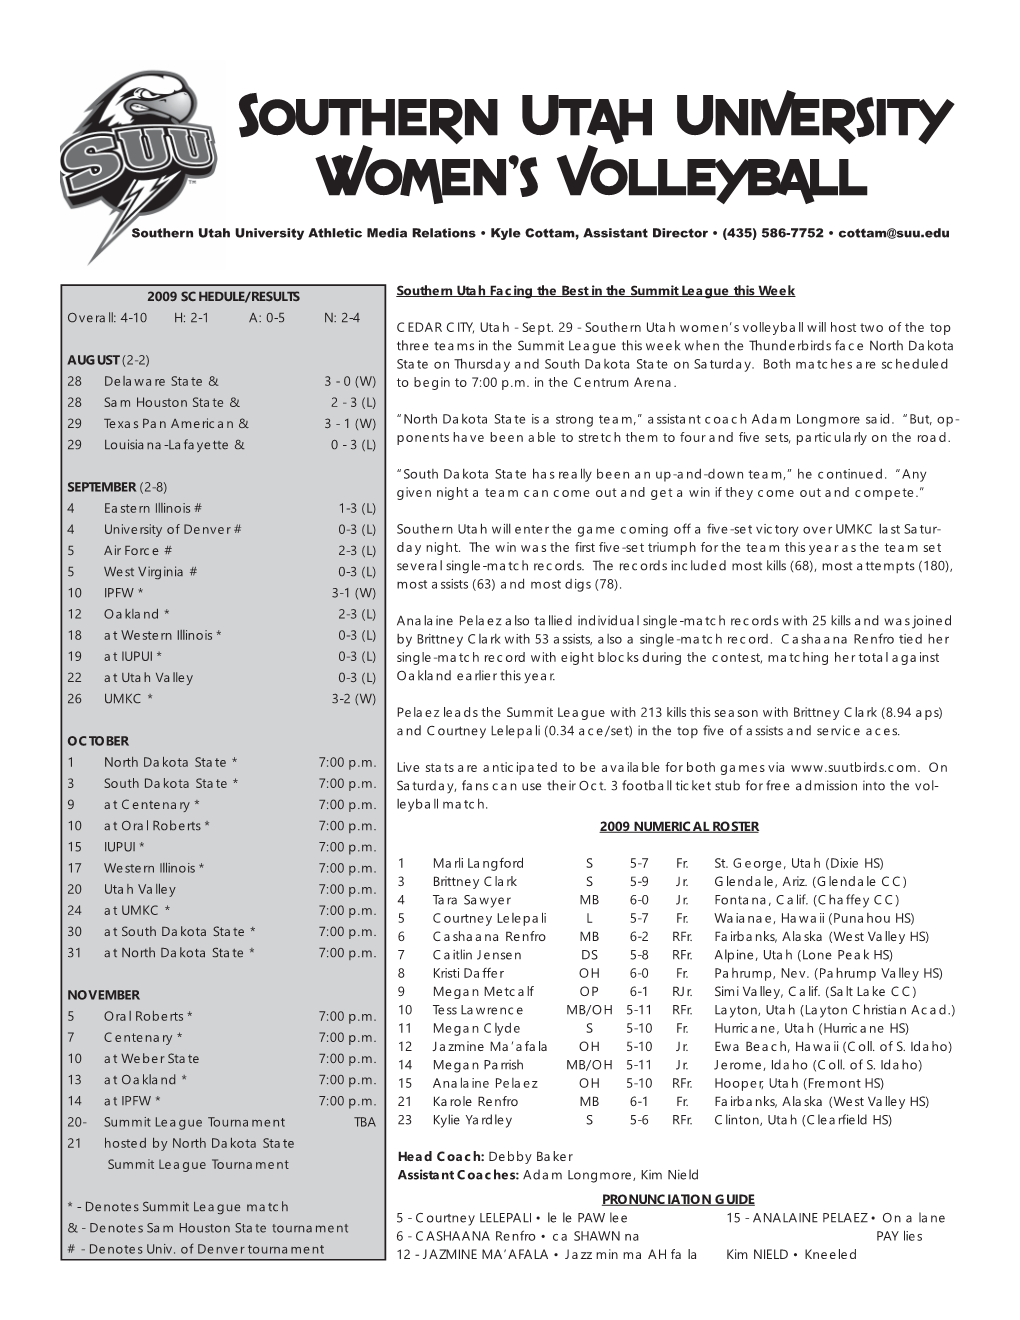 Southern Utah University Women's Volleyball